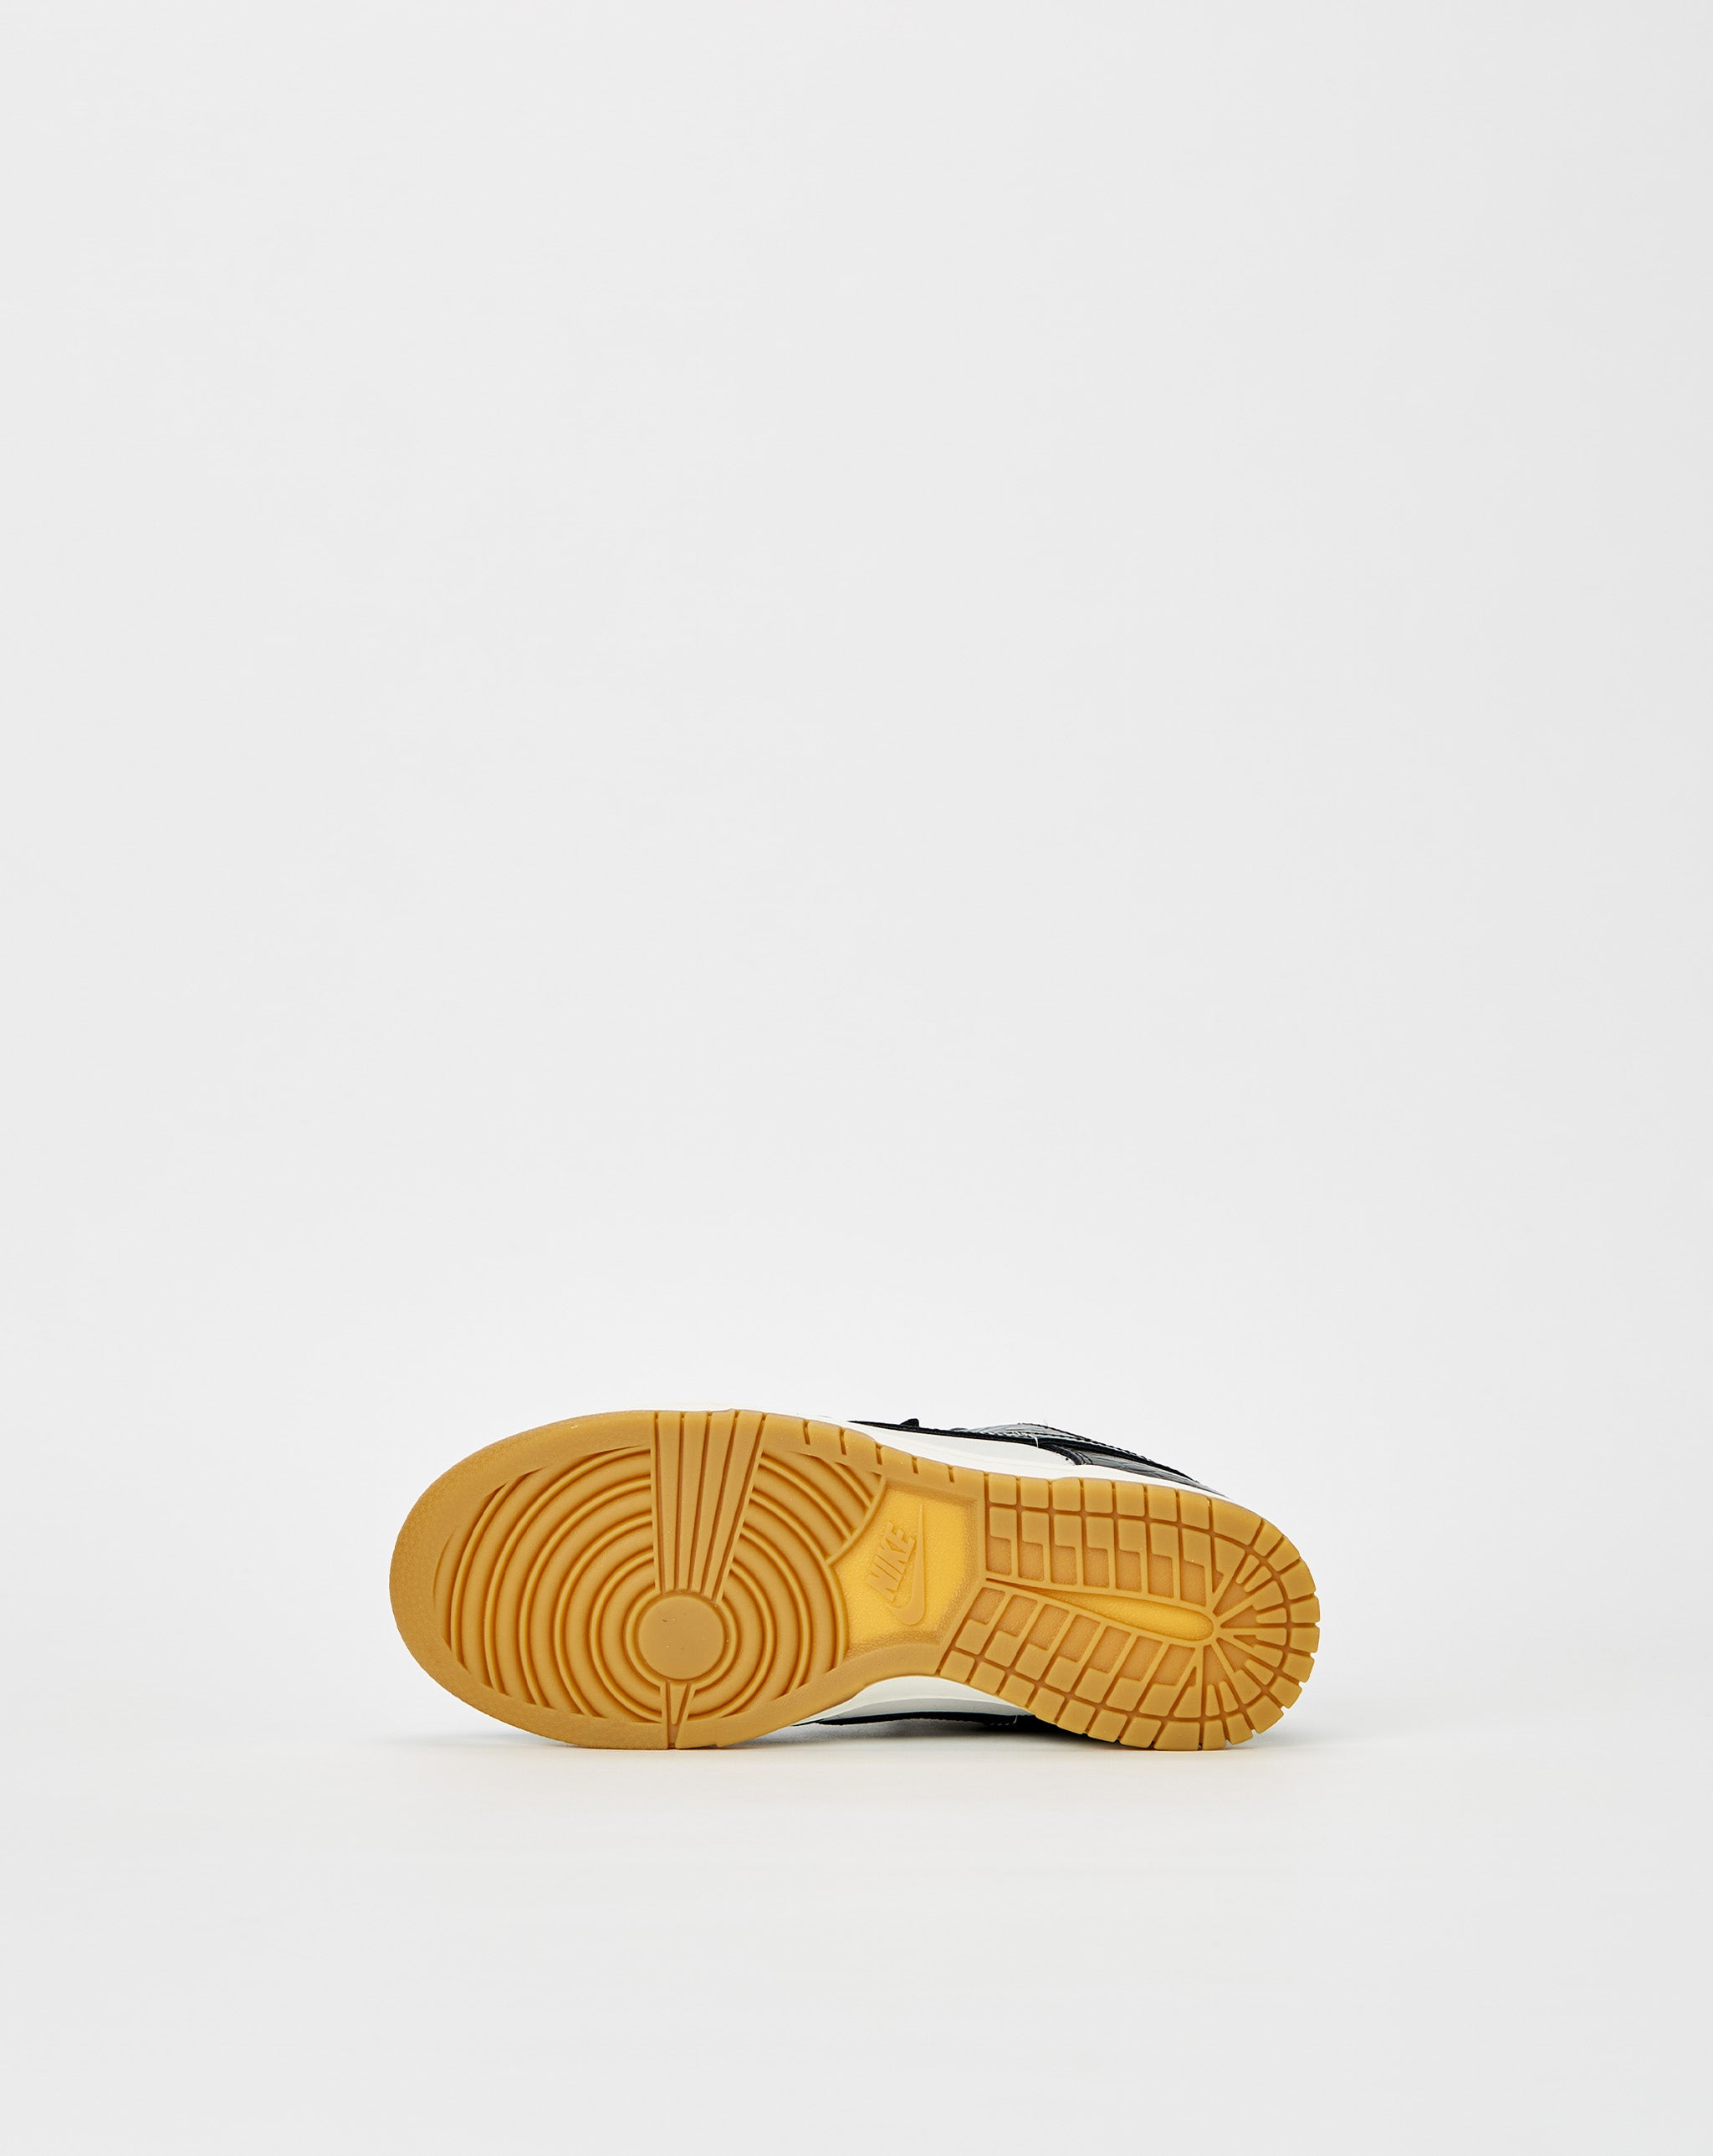 Nike nike lunar janoski black and gold swoosh color  - Cheap Urlfreeze Jordan outlet